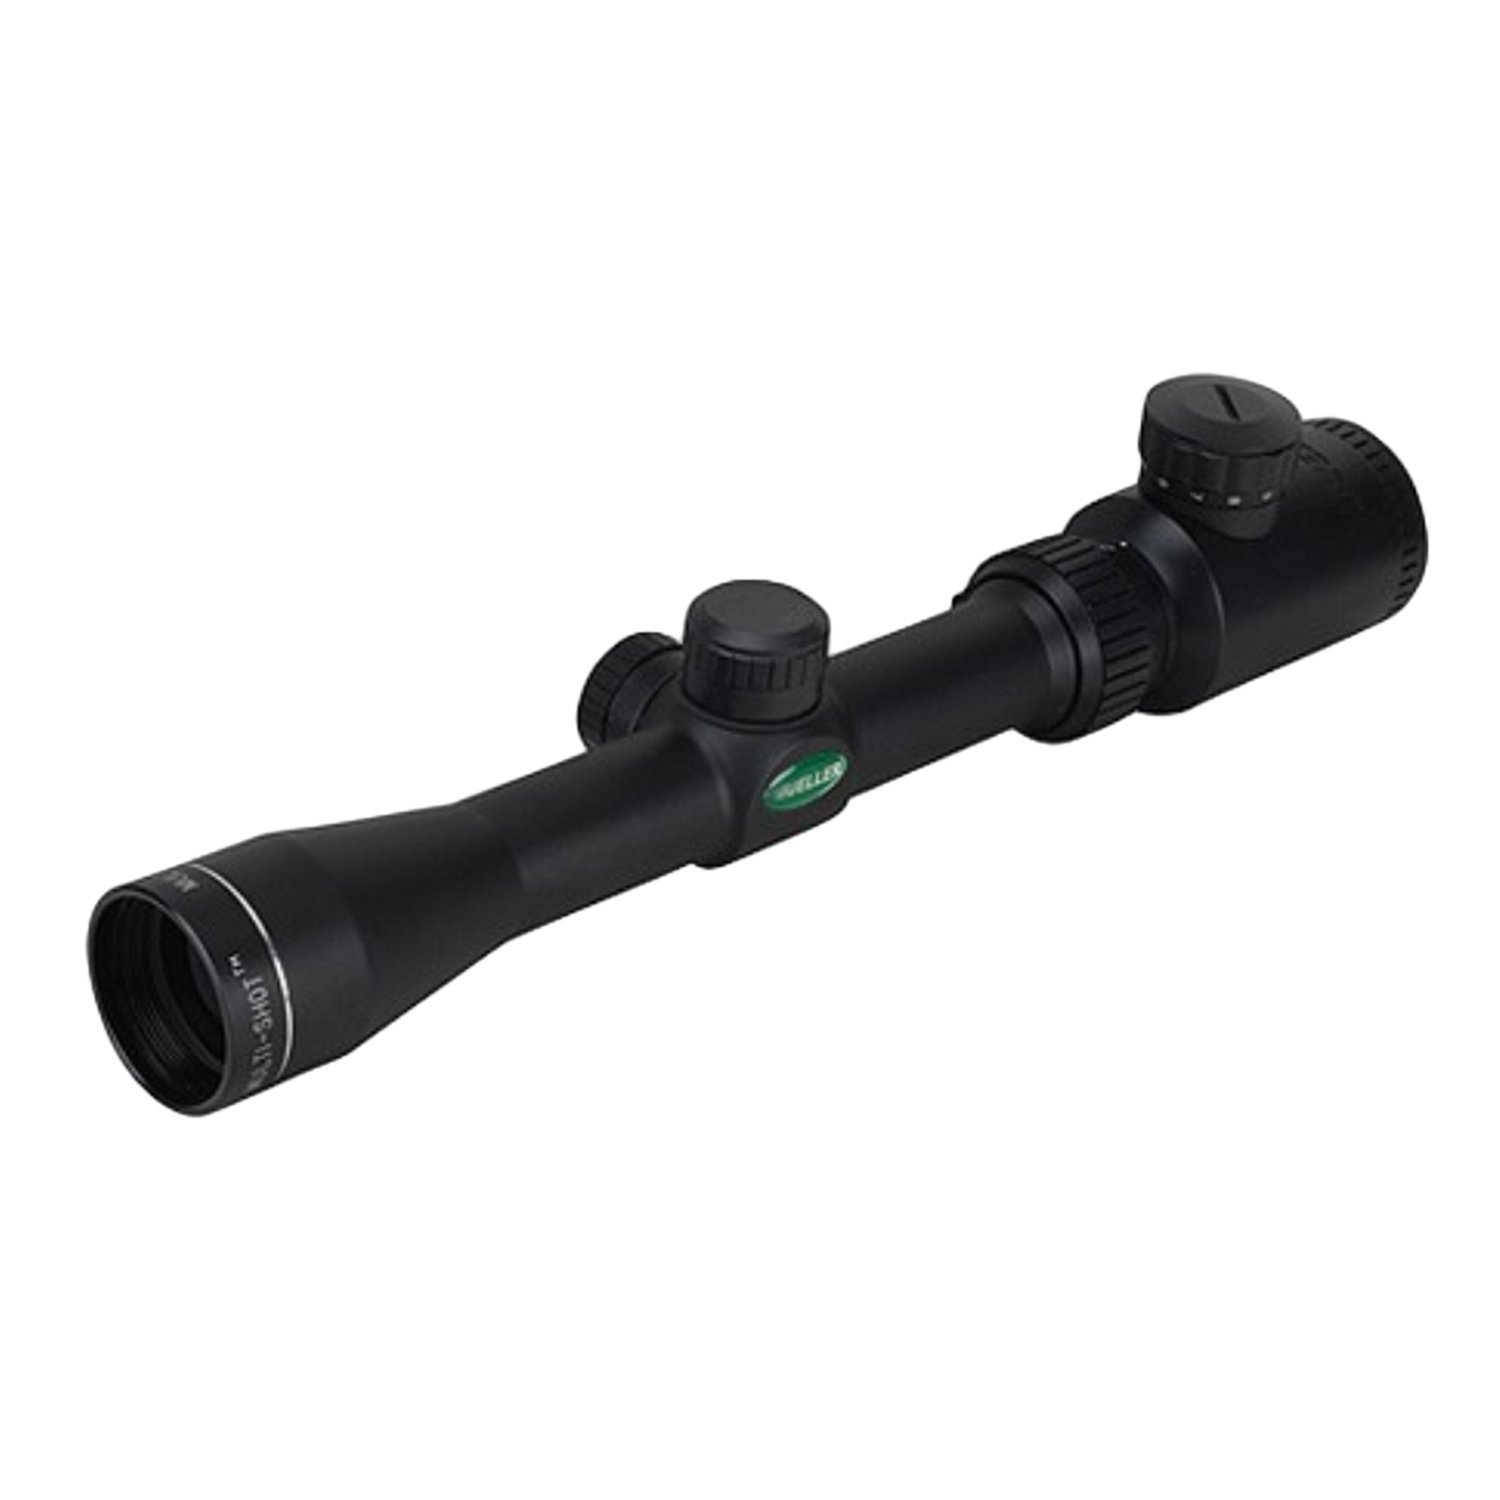 Mueller Optical 2-7x32mm Multishot Riflescope